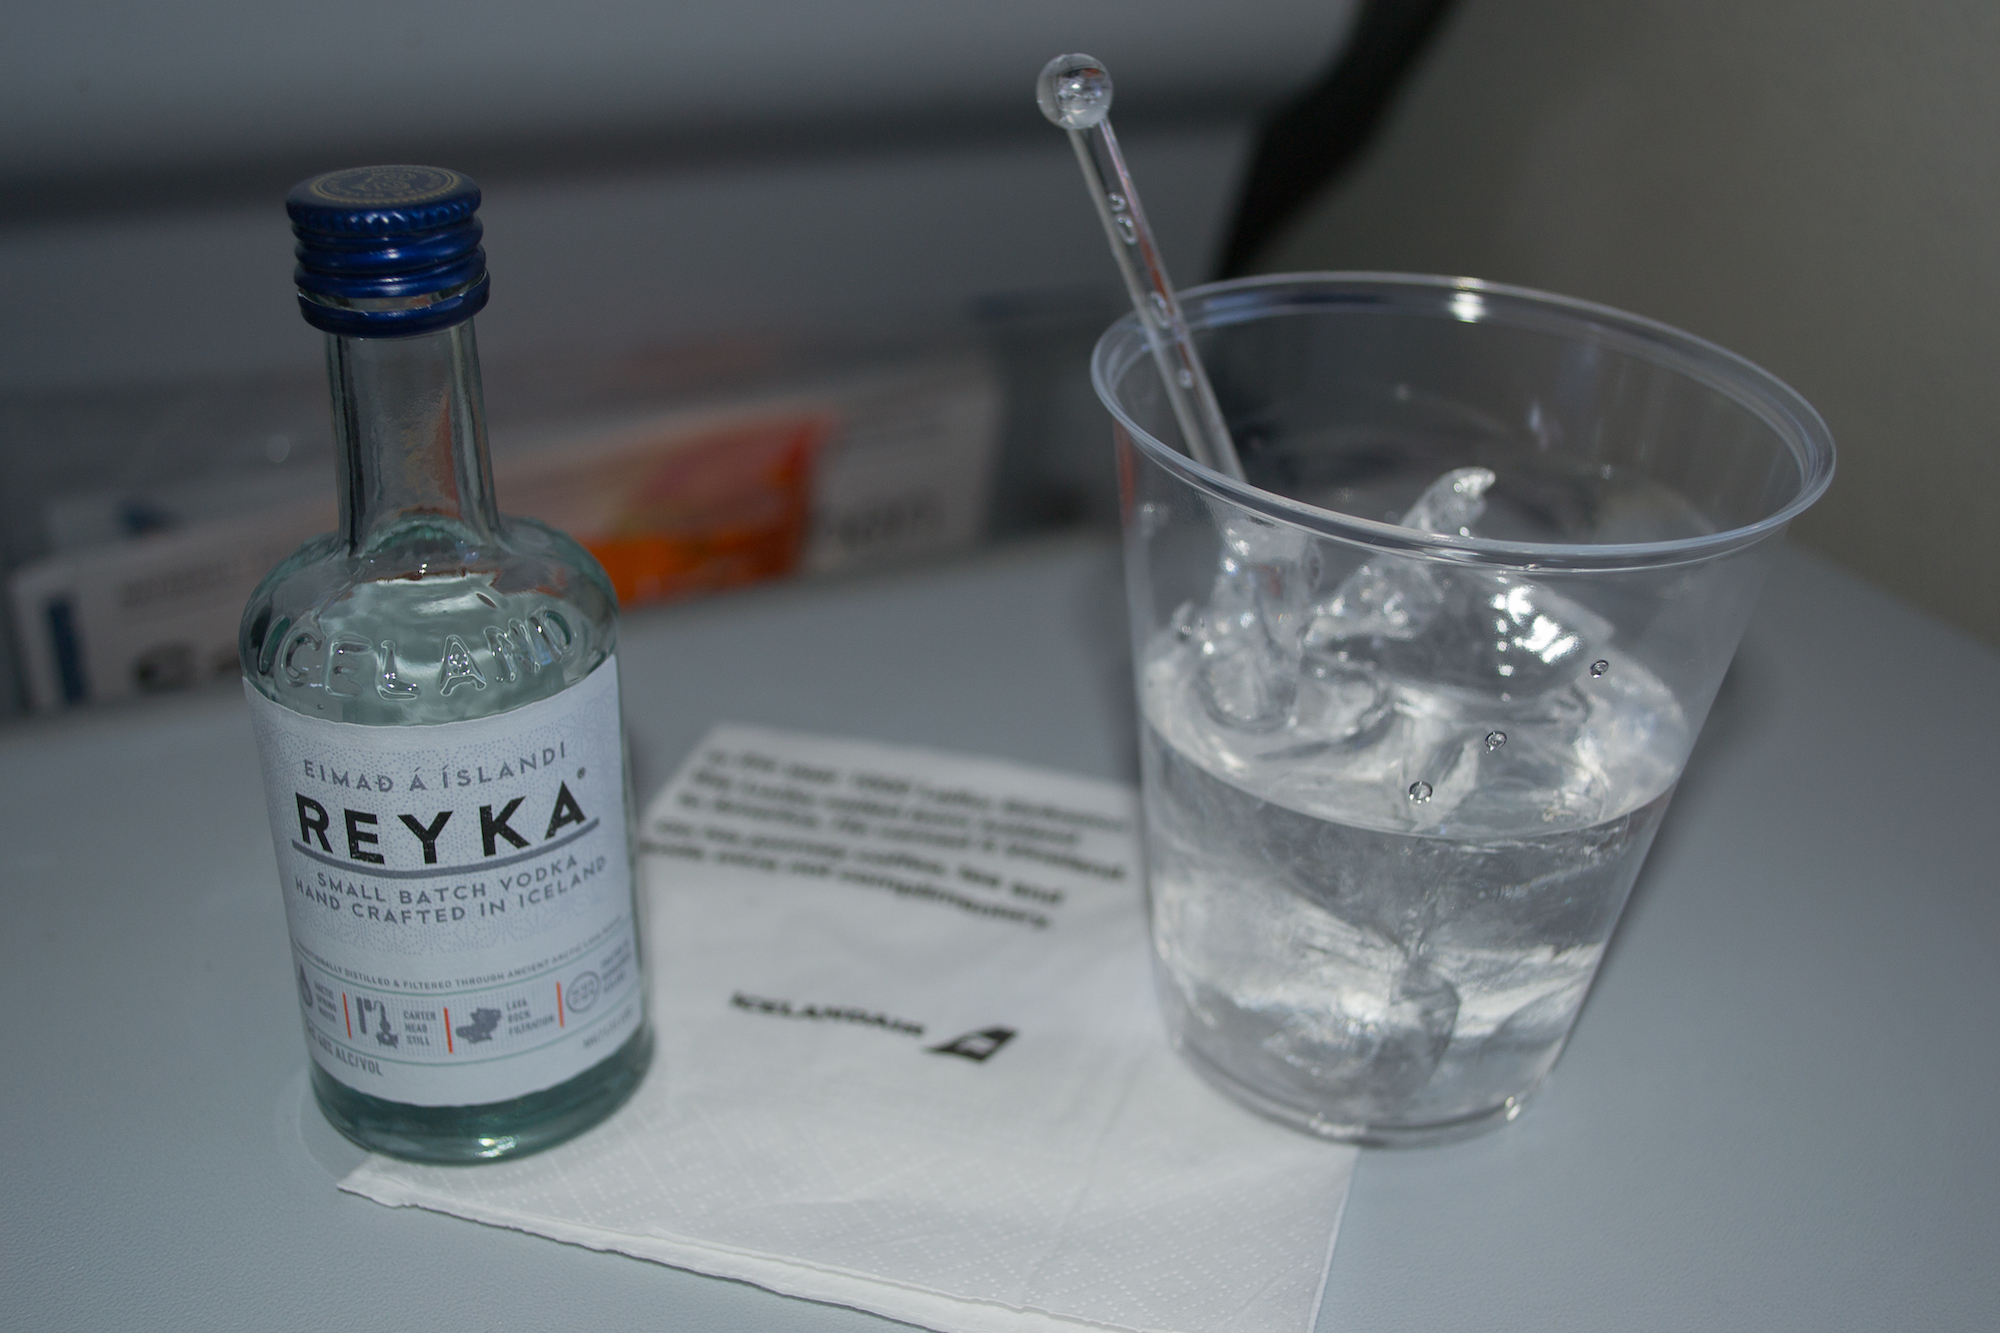 Drinking Reyka vodka on the plane.